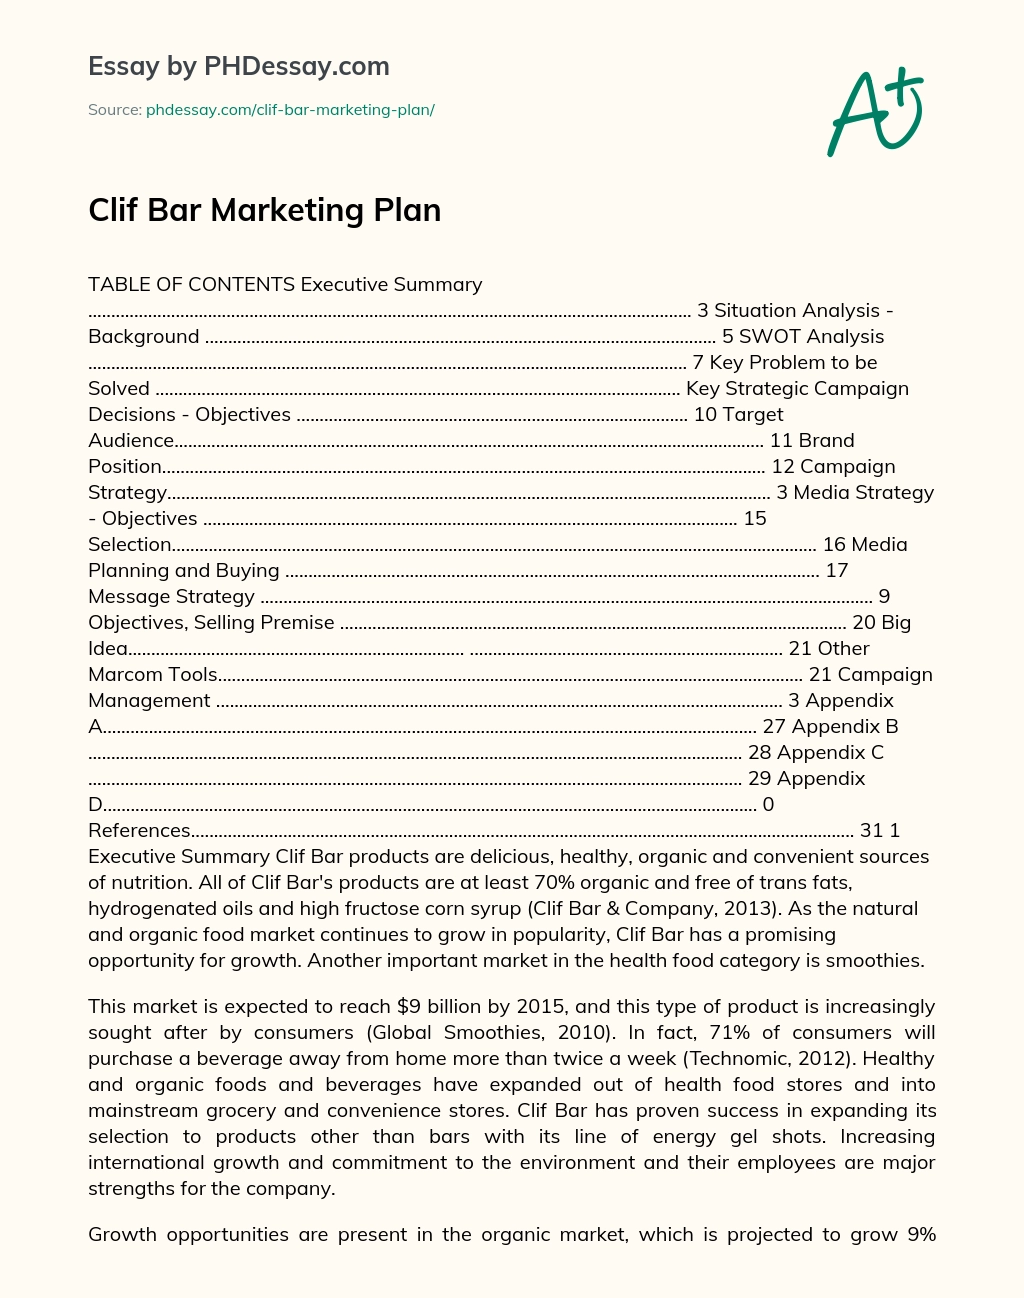 Clif Bar Marketing Plan essay